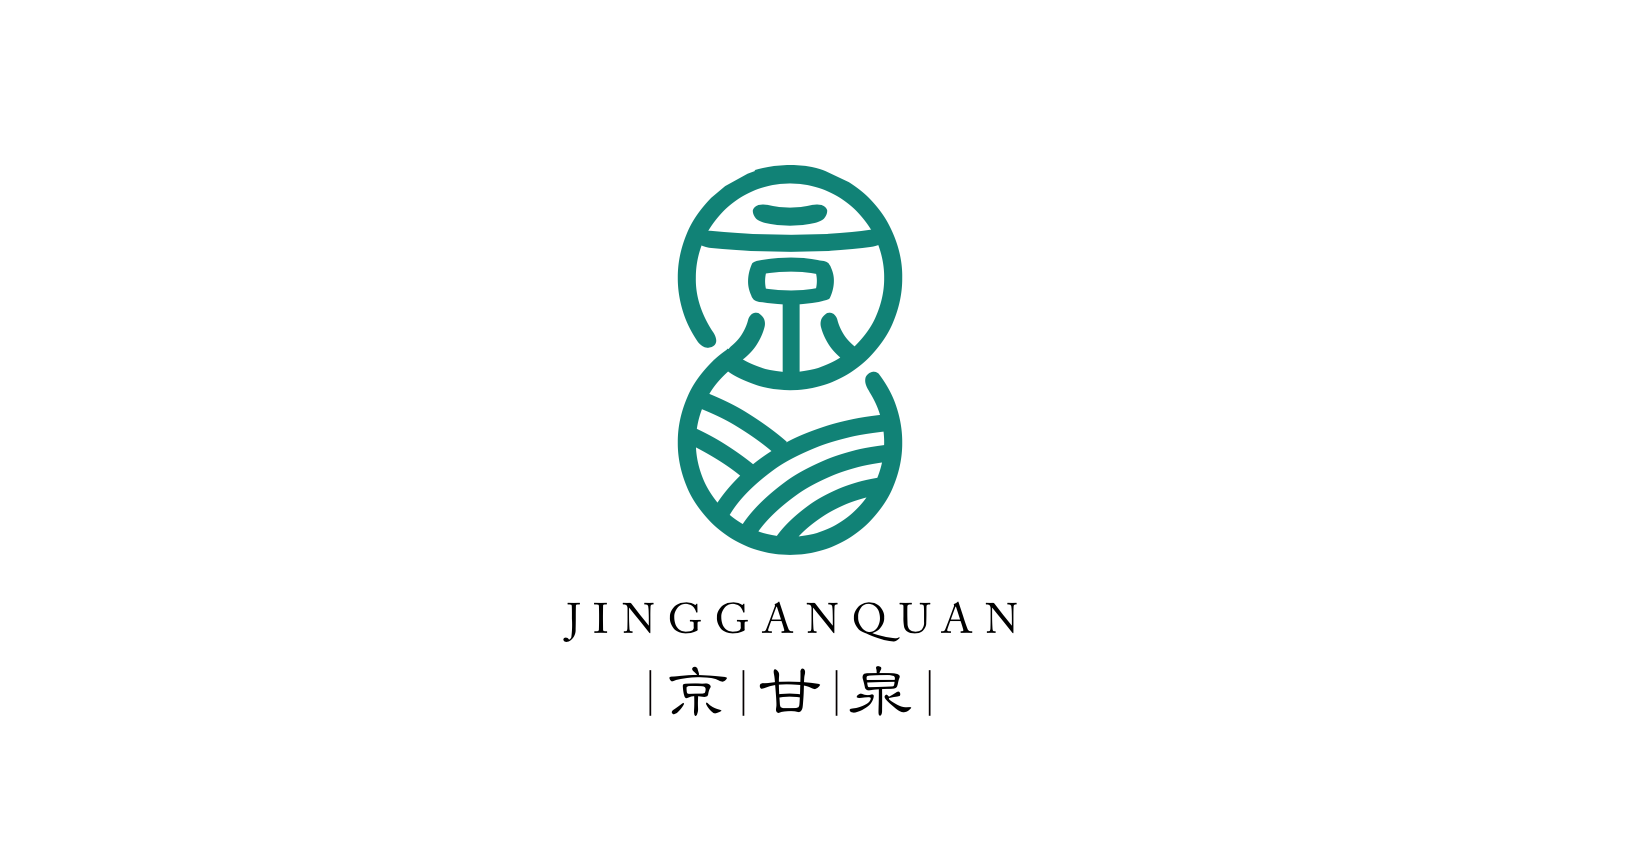 YANGZHOU Jingganquan ceoseience_park brand_design